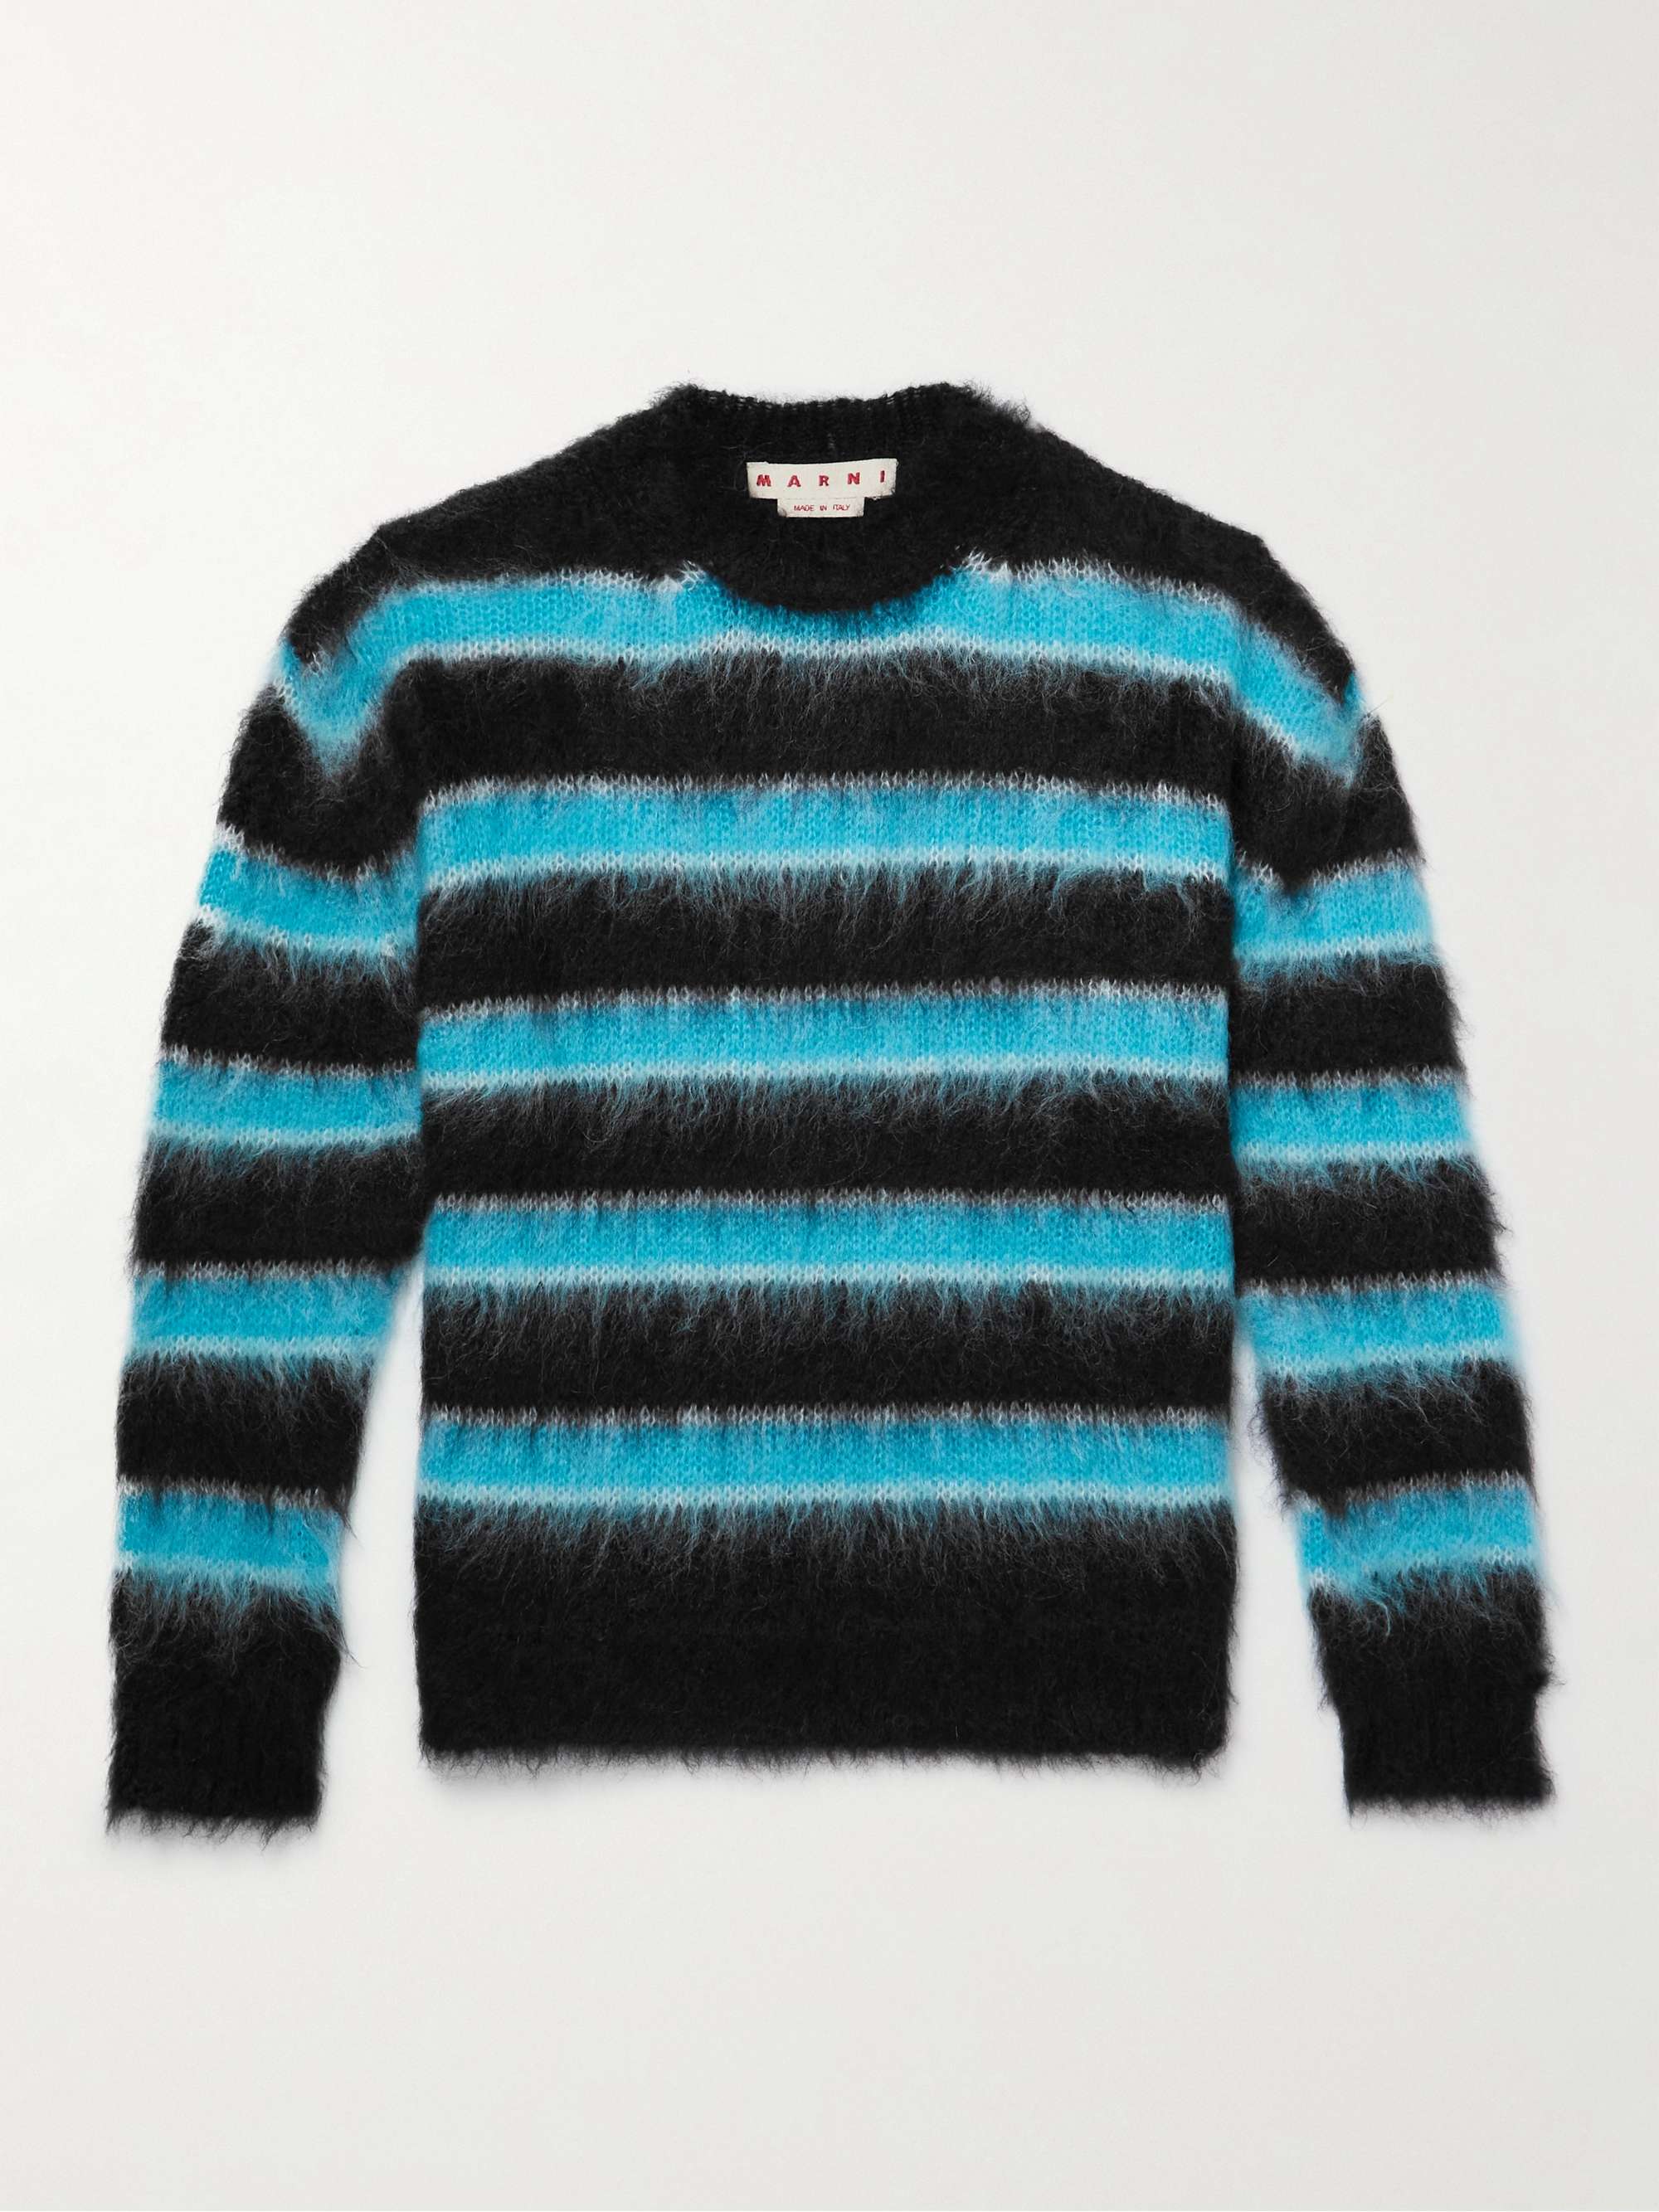 MARNI Striped Mohair-Blend Sweater | MR PORTER